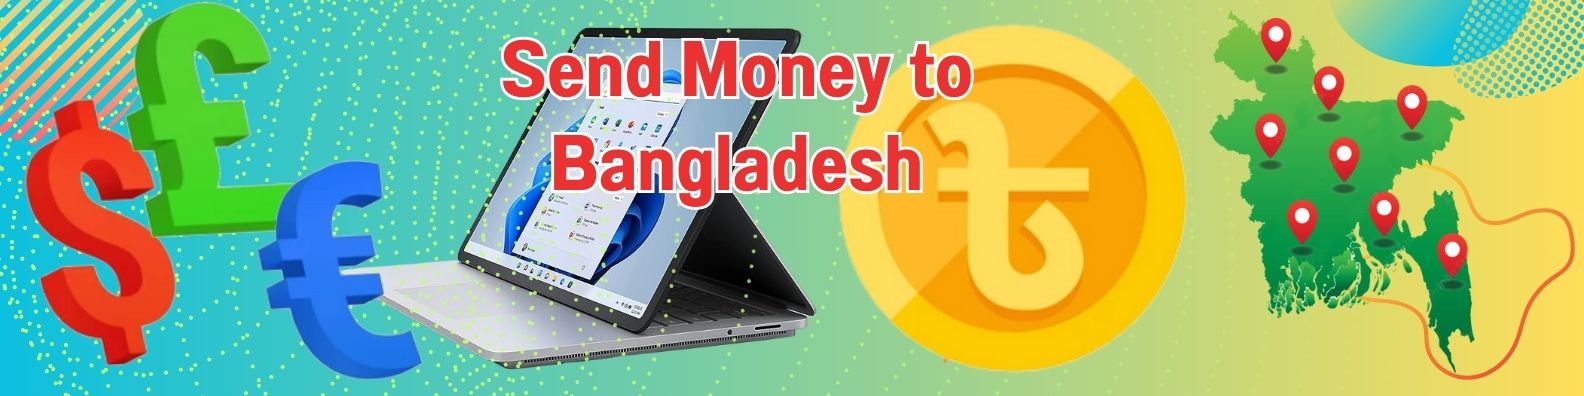 Send Money to Bangladesh